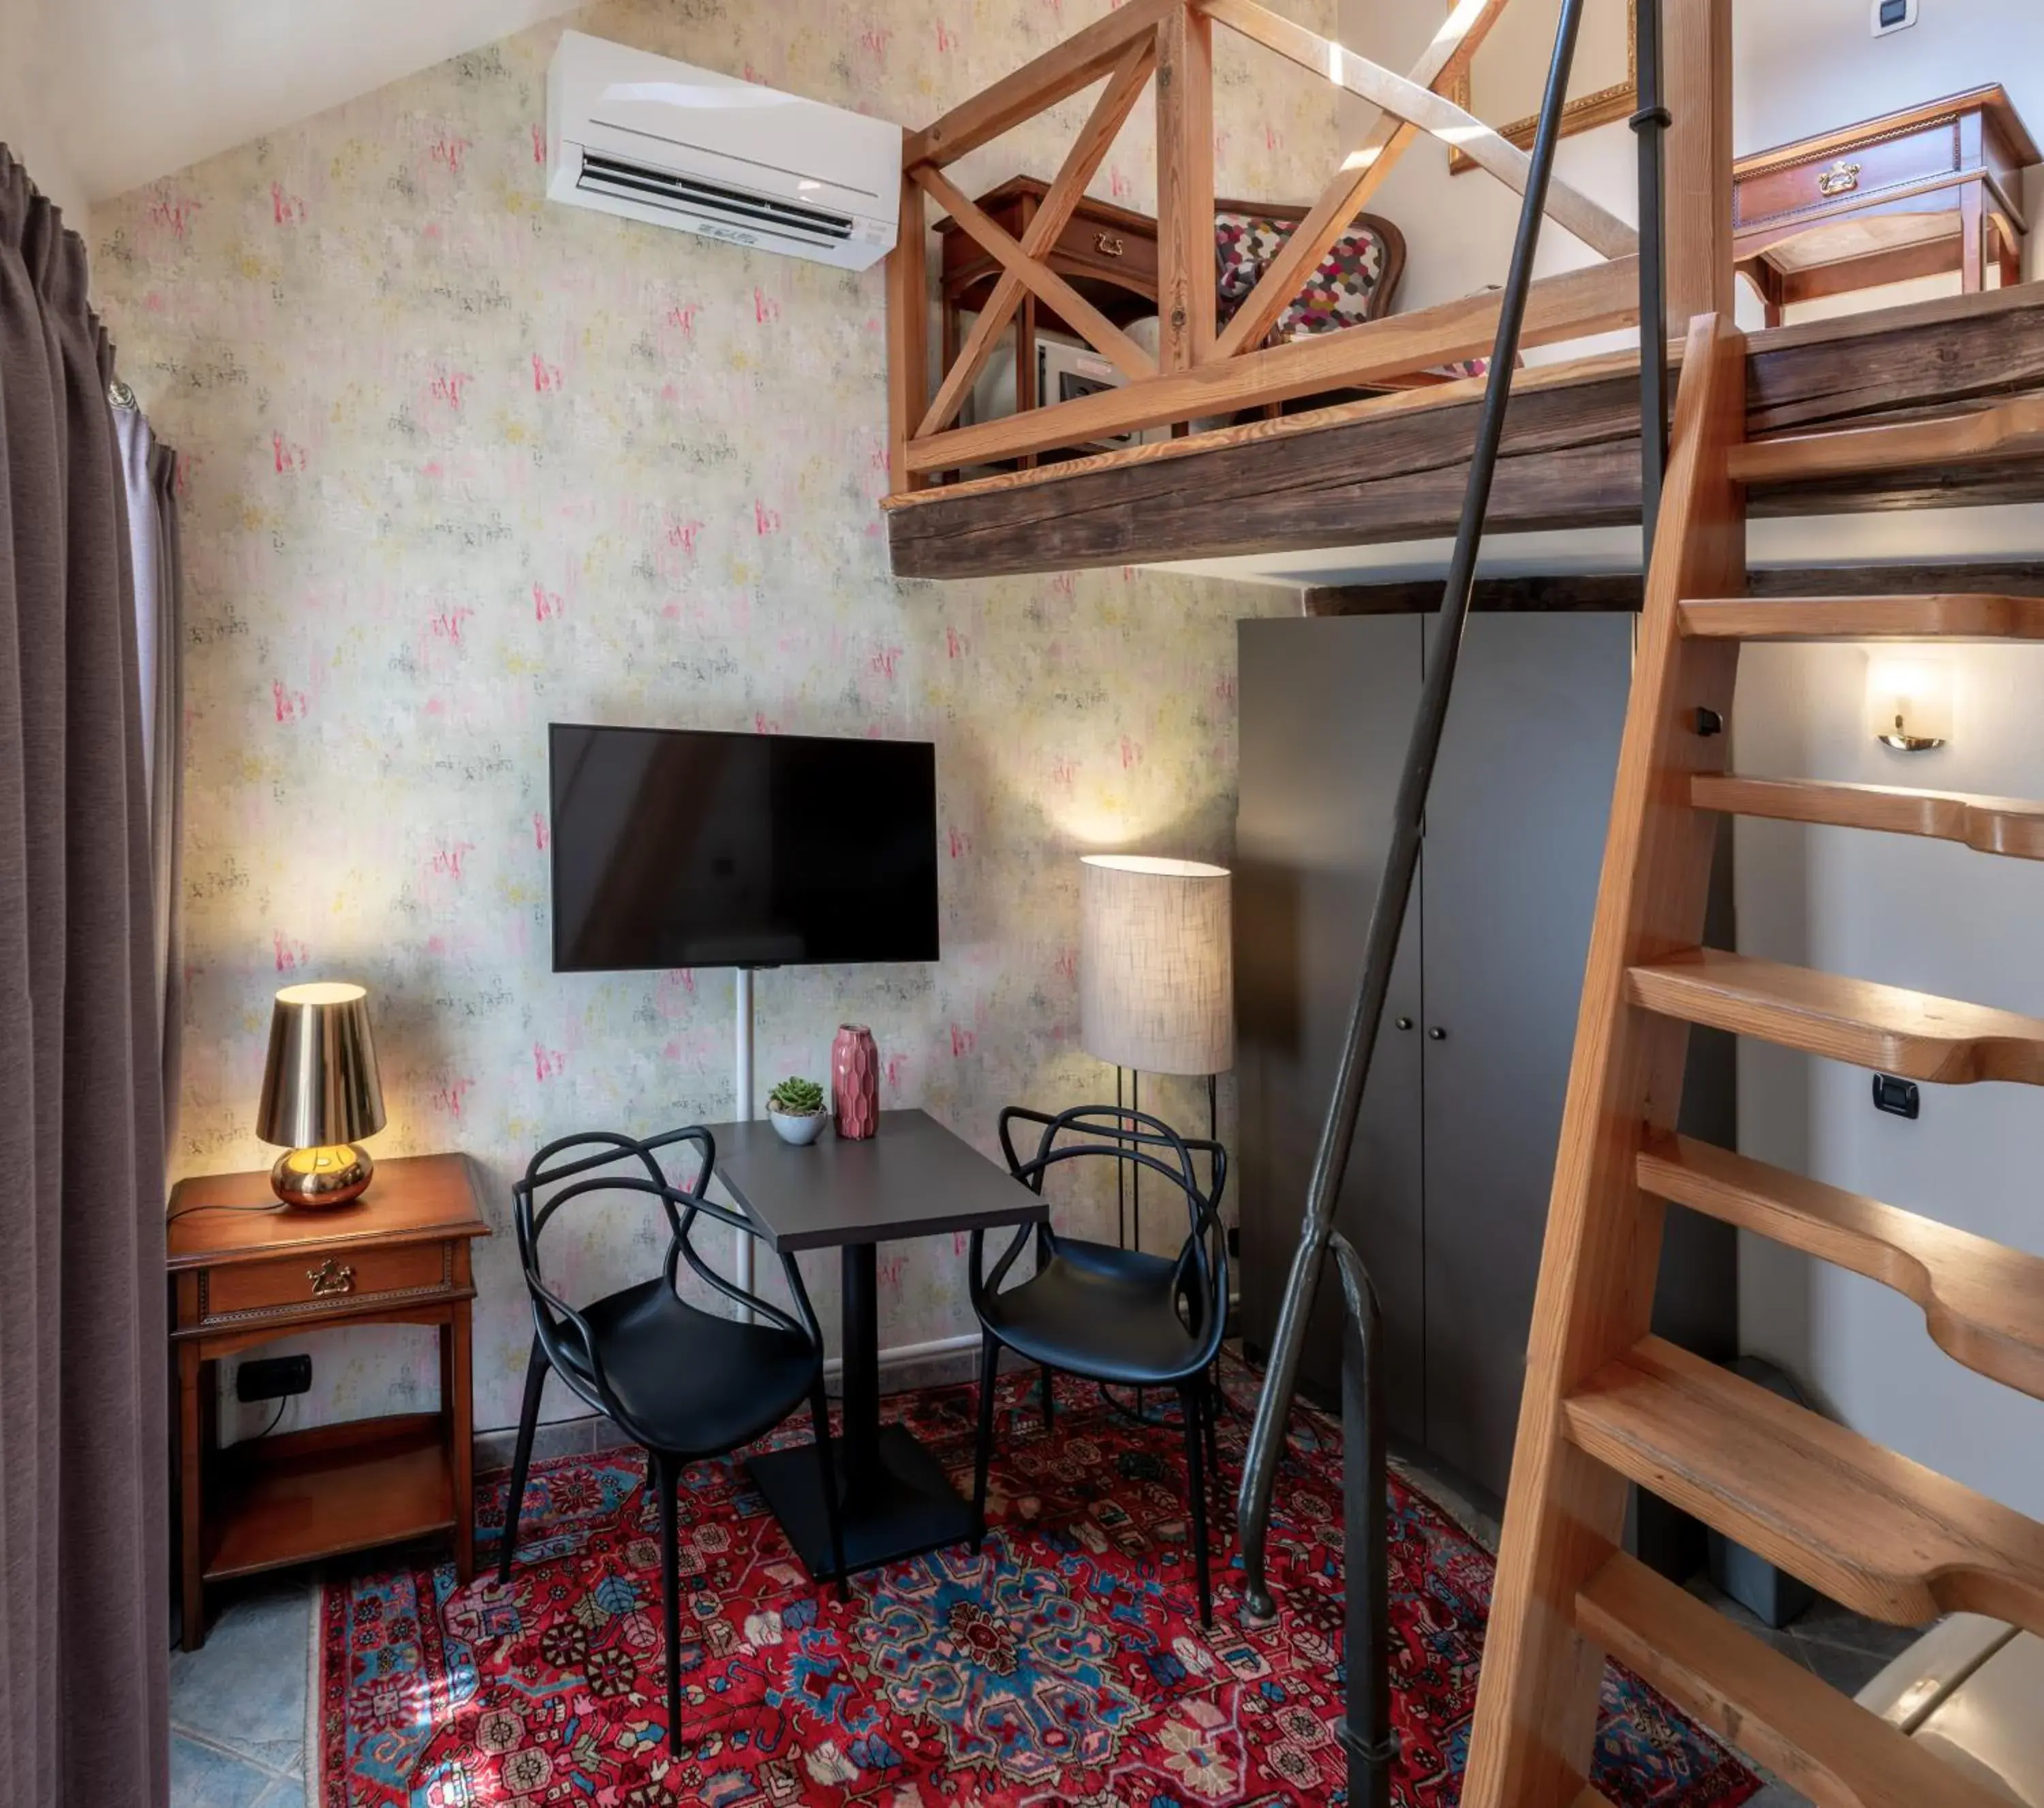 Duplex Studio in Chateau 9 Apartments by Adrez Living